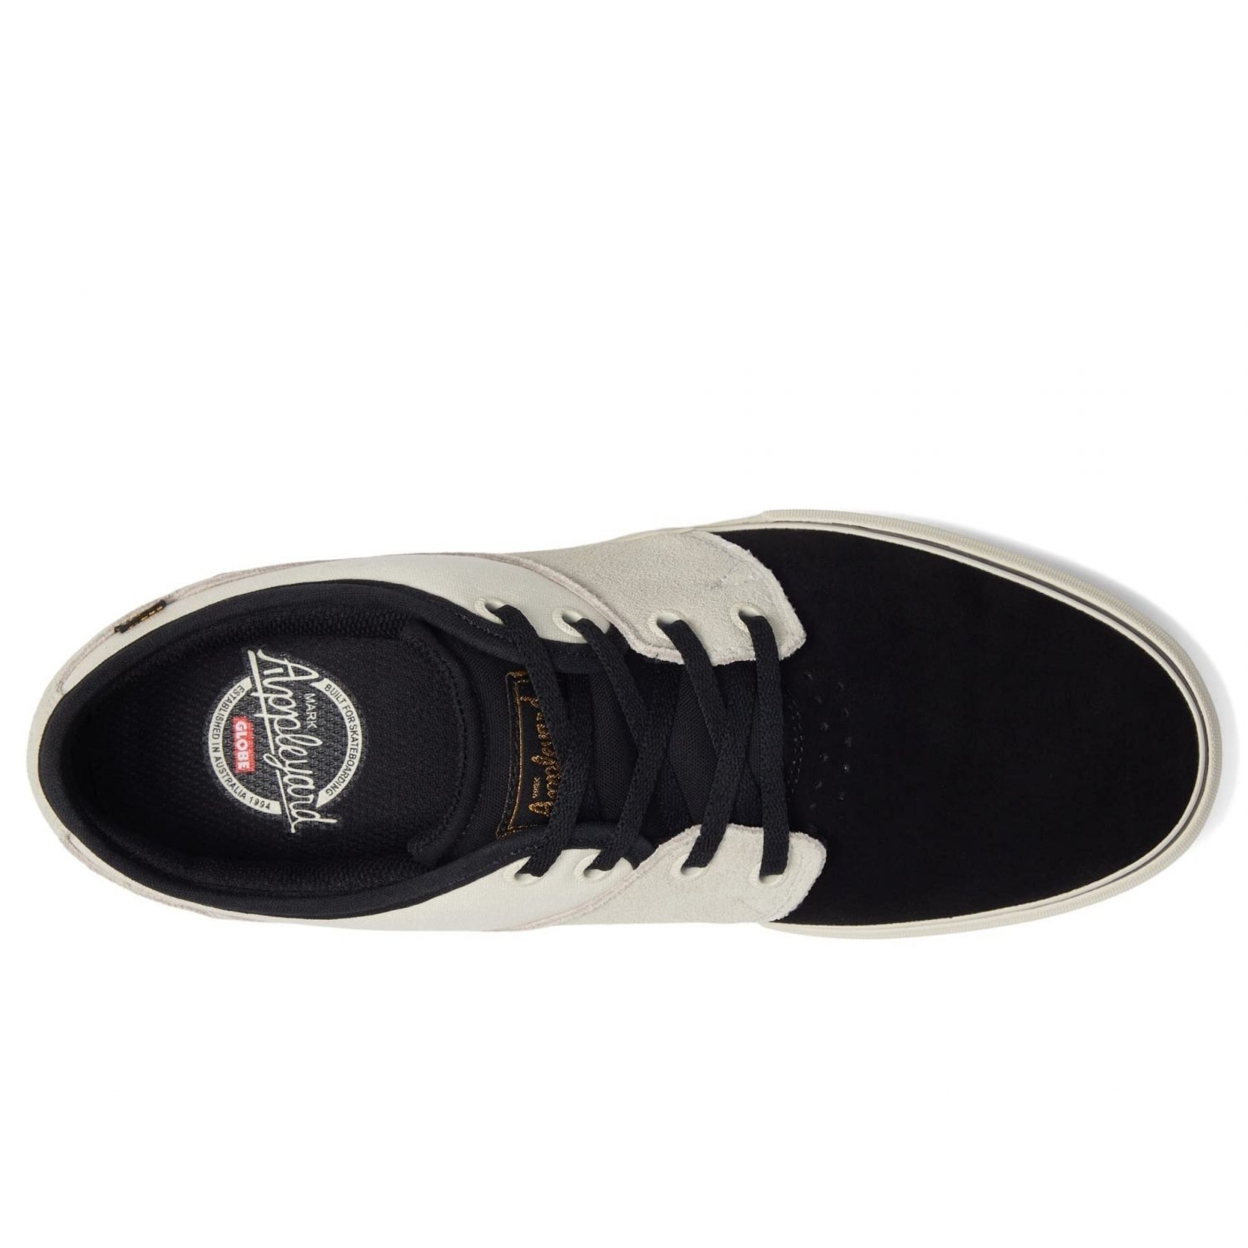 Globe Men's Mahalo Skate Shoe 14 BLACK/OFF WHITE - BLACK/OFF WHITE, 12